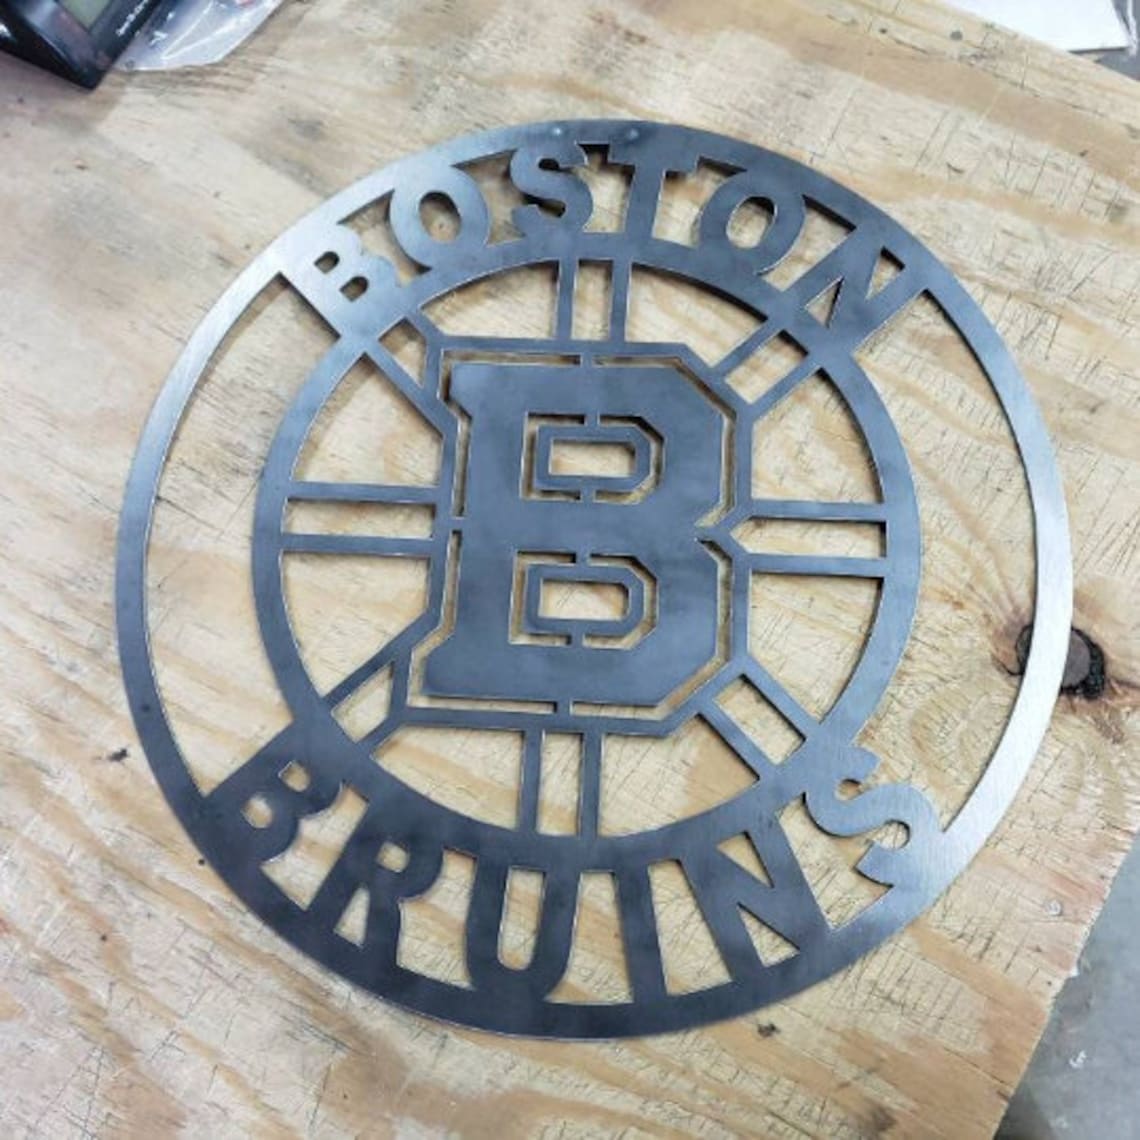 Boston Bruins Metal Sign Etsy